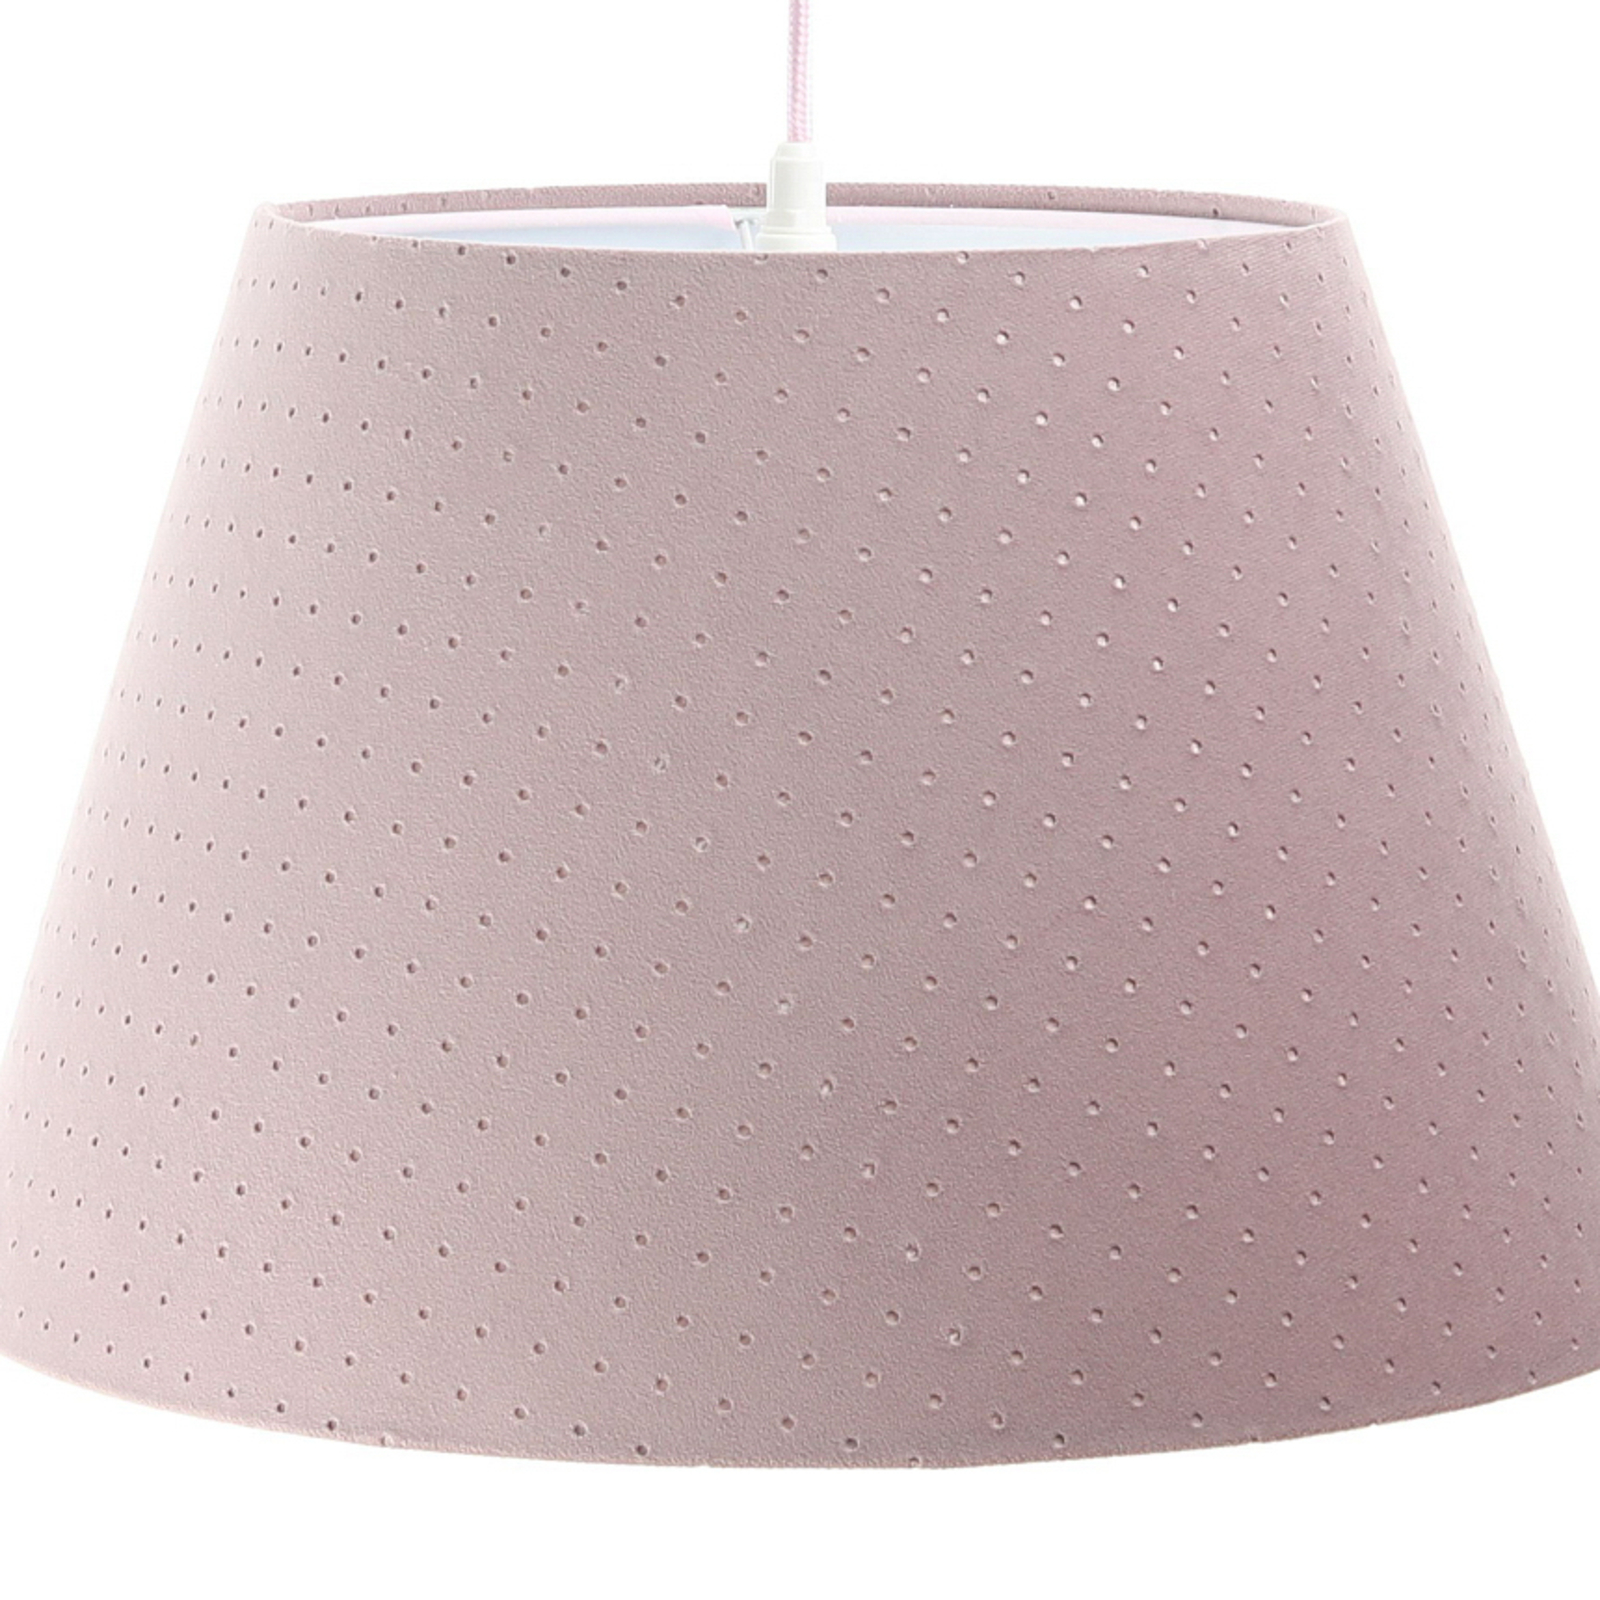 Rosabelle pendant light, conical, pink, 1-bulb